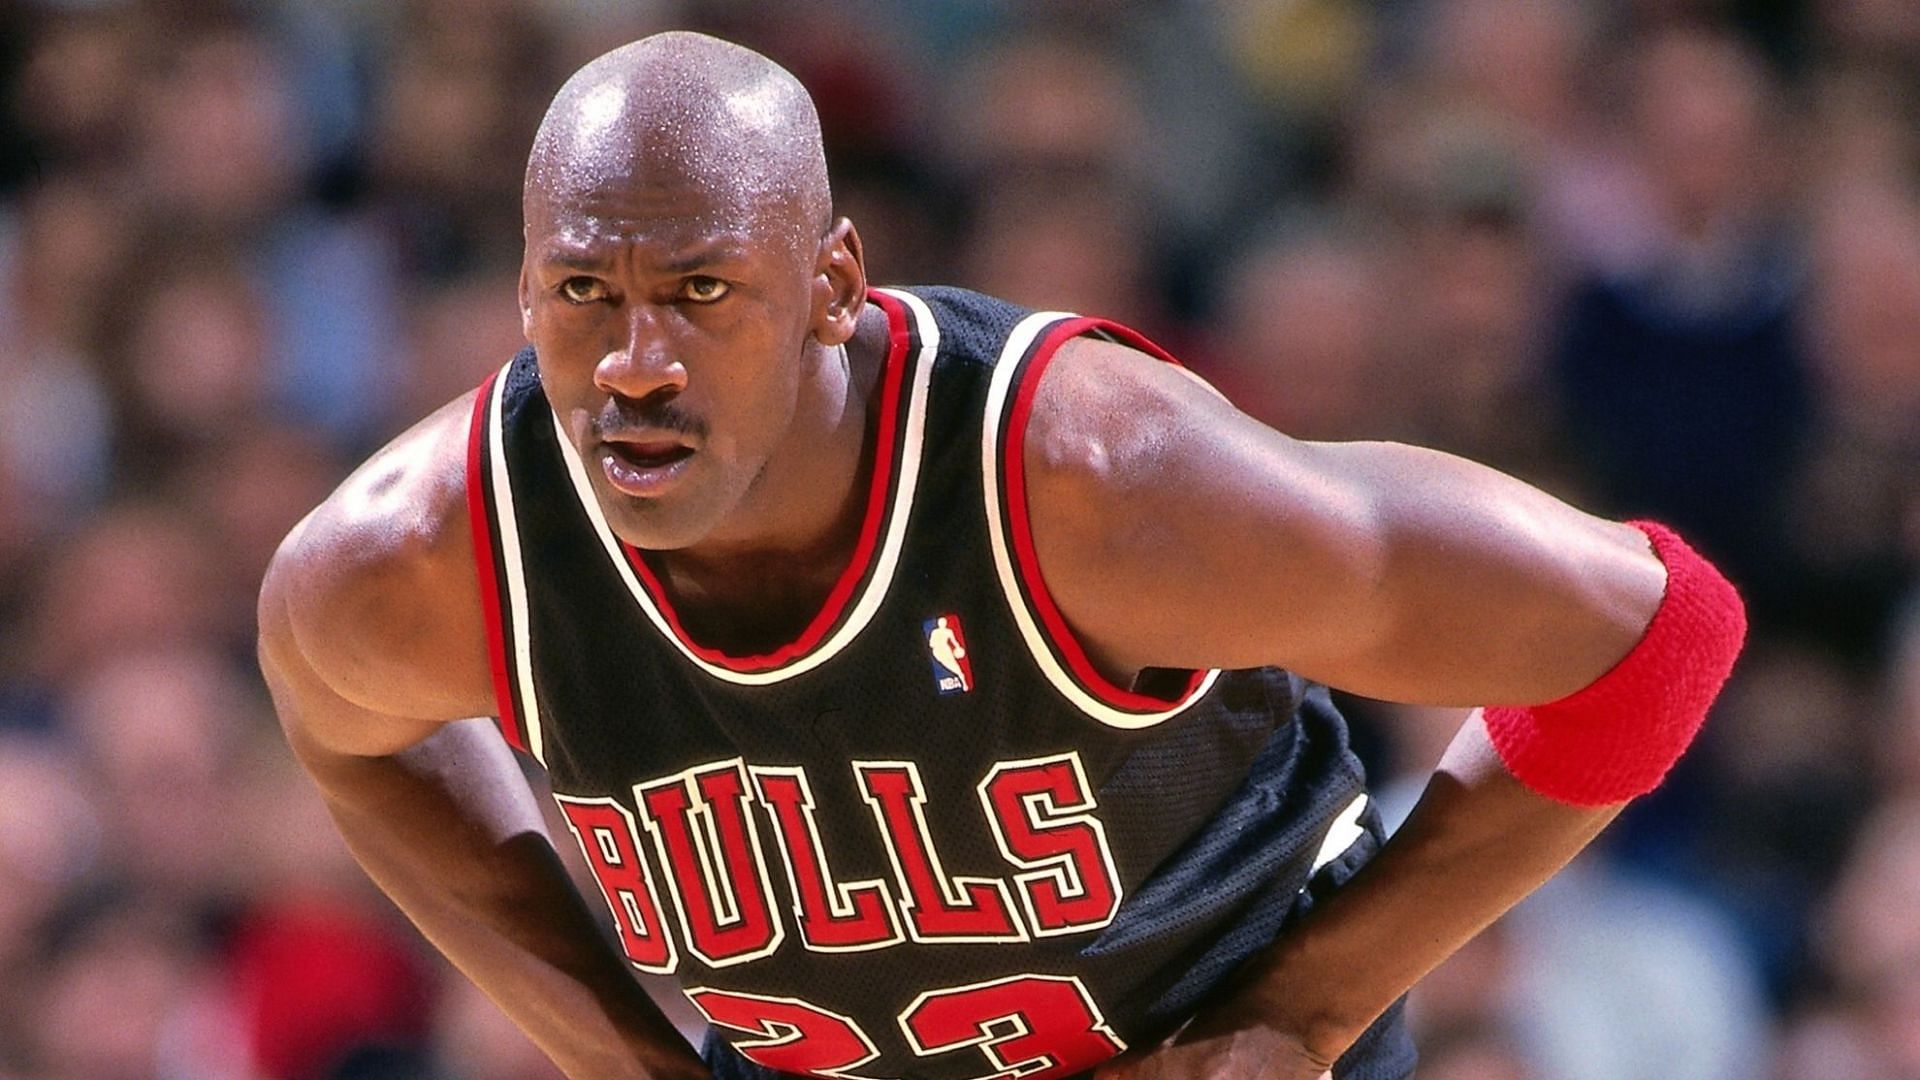 Michael Jordan in action for the Chicago Bulls